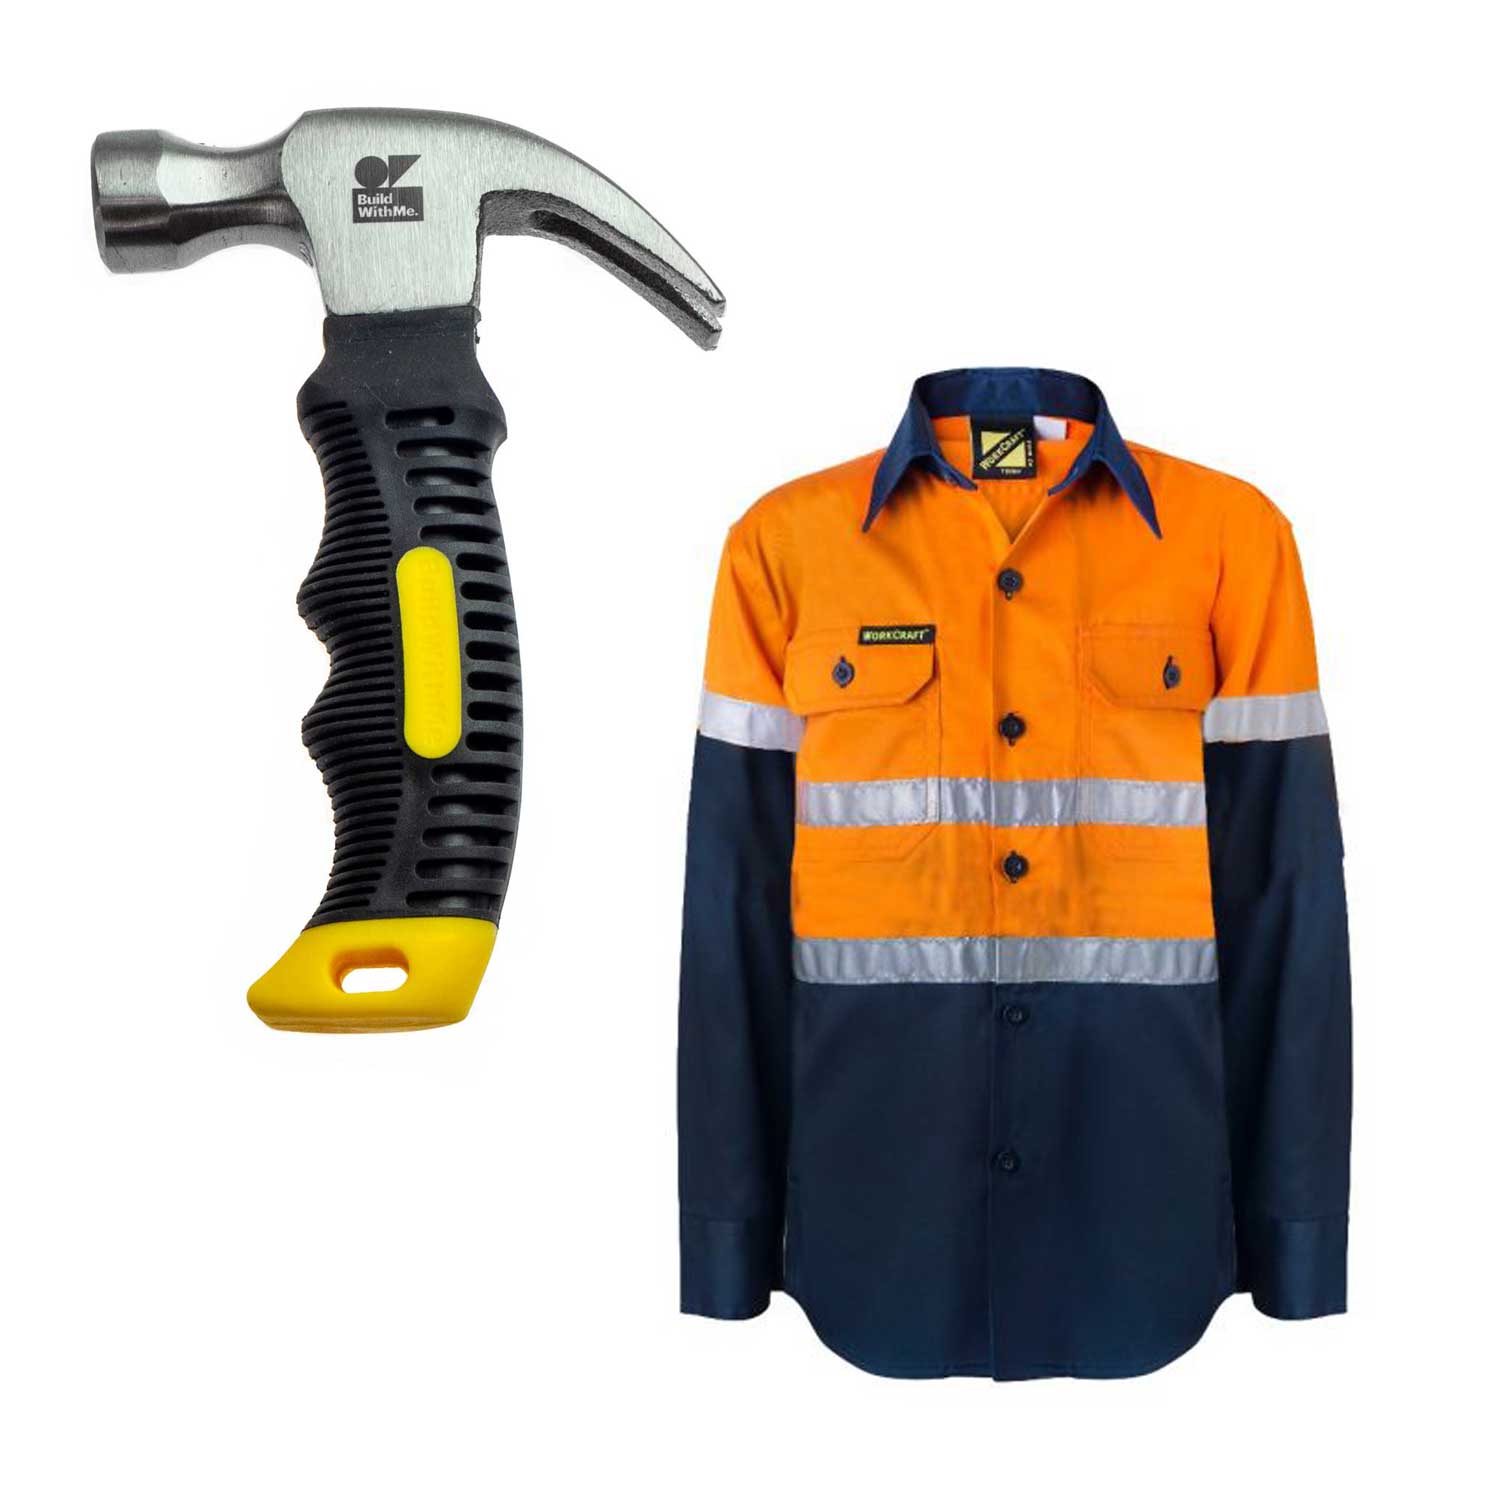 Work Shirt and Hammer